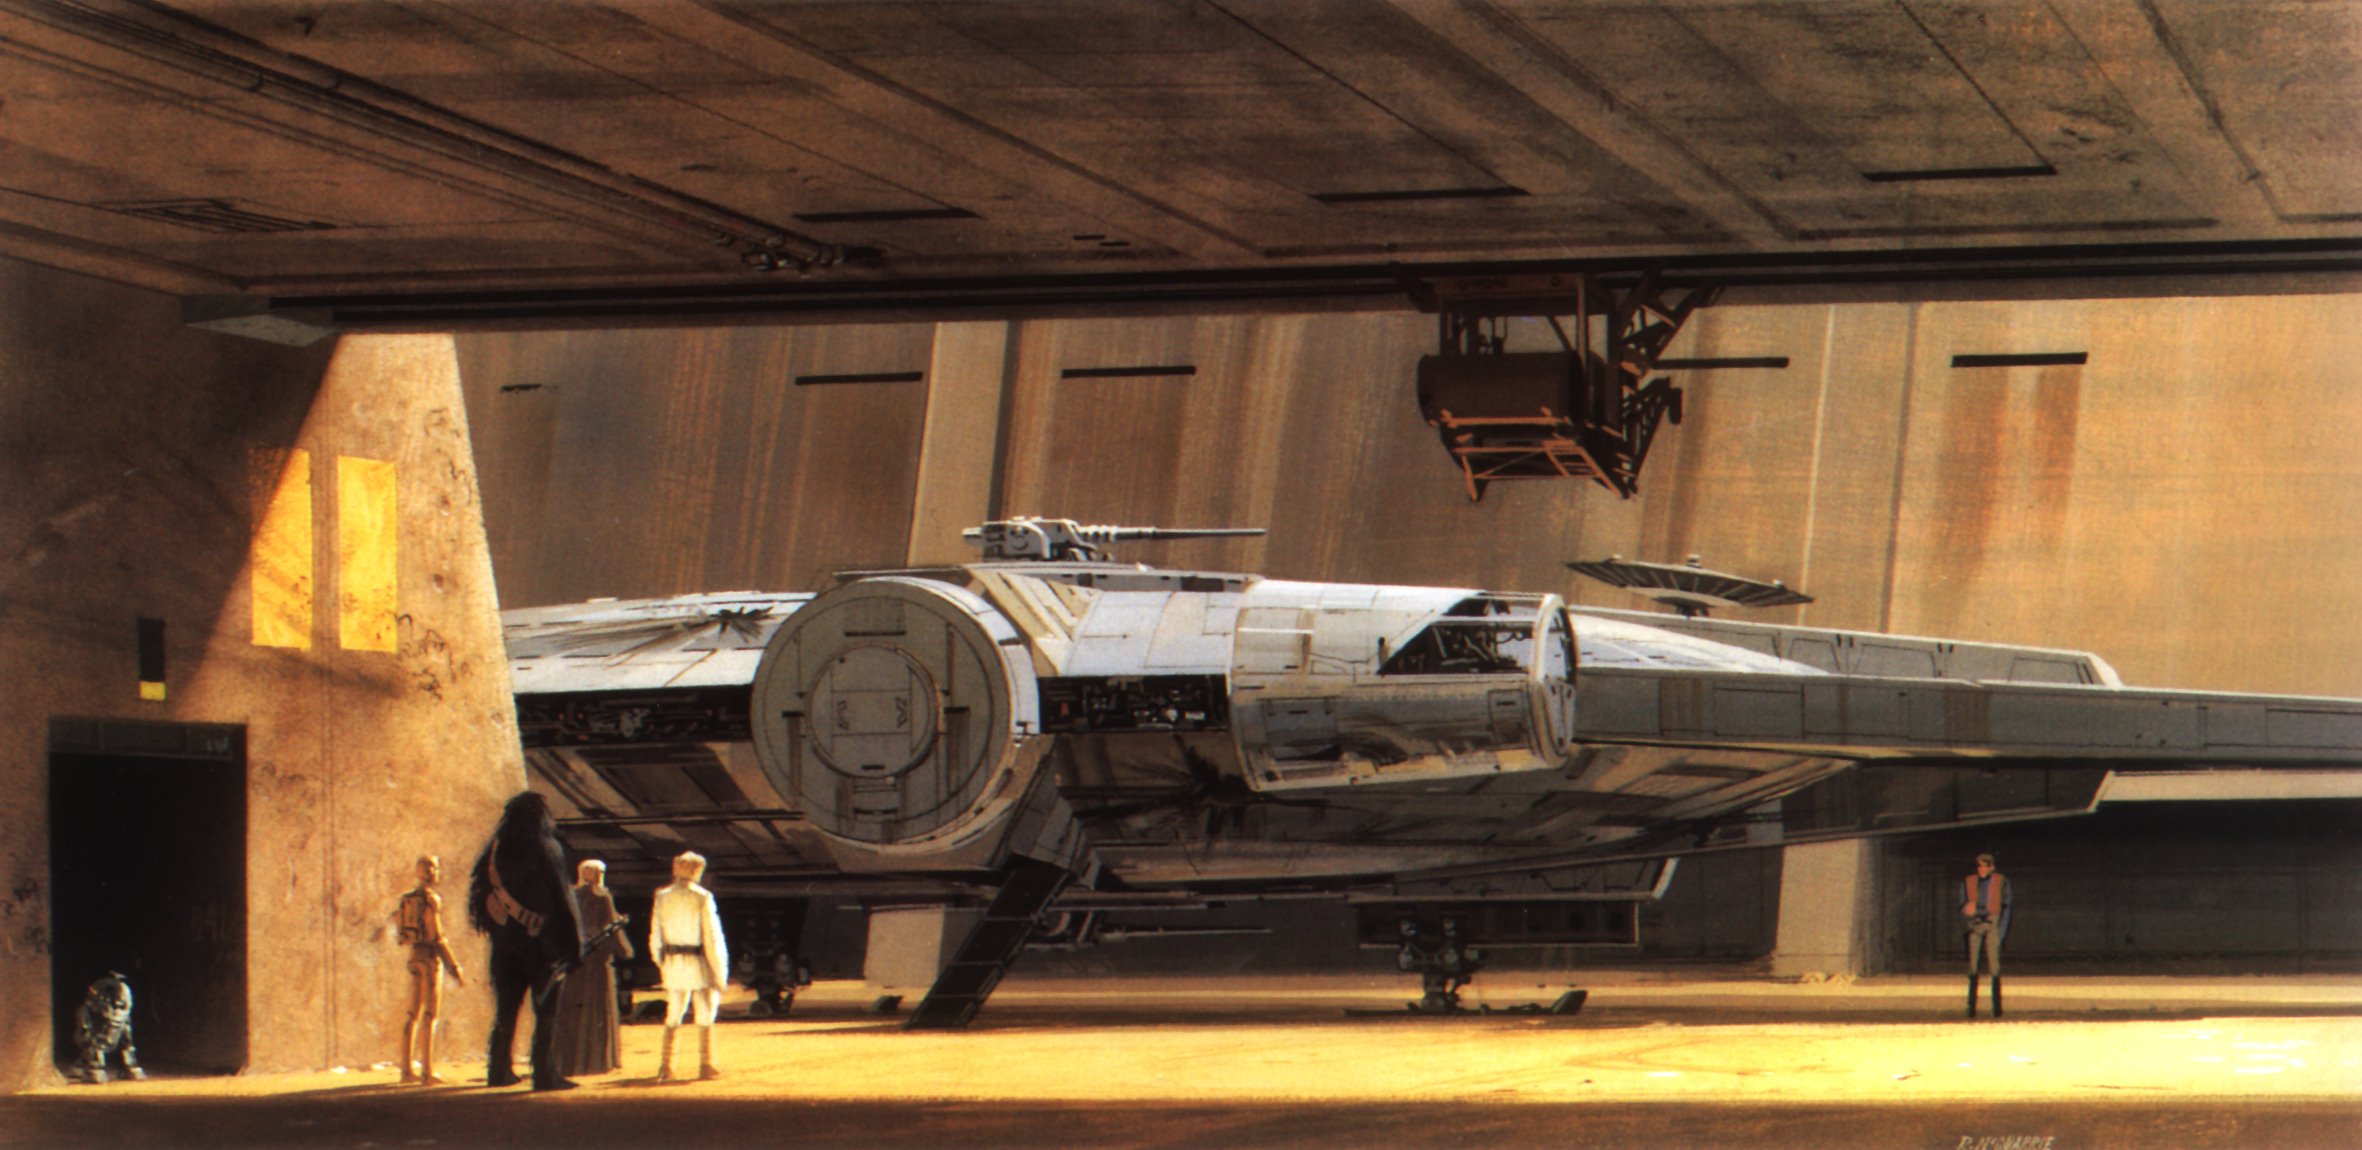 Star Wars, Han Solo, Millennium Falcon - desktop wallpaper